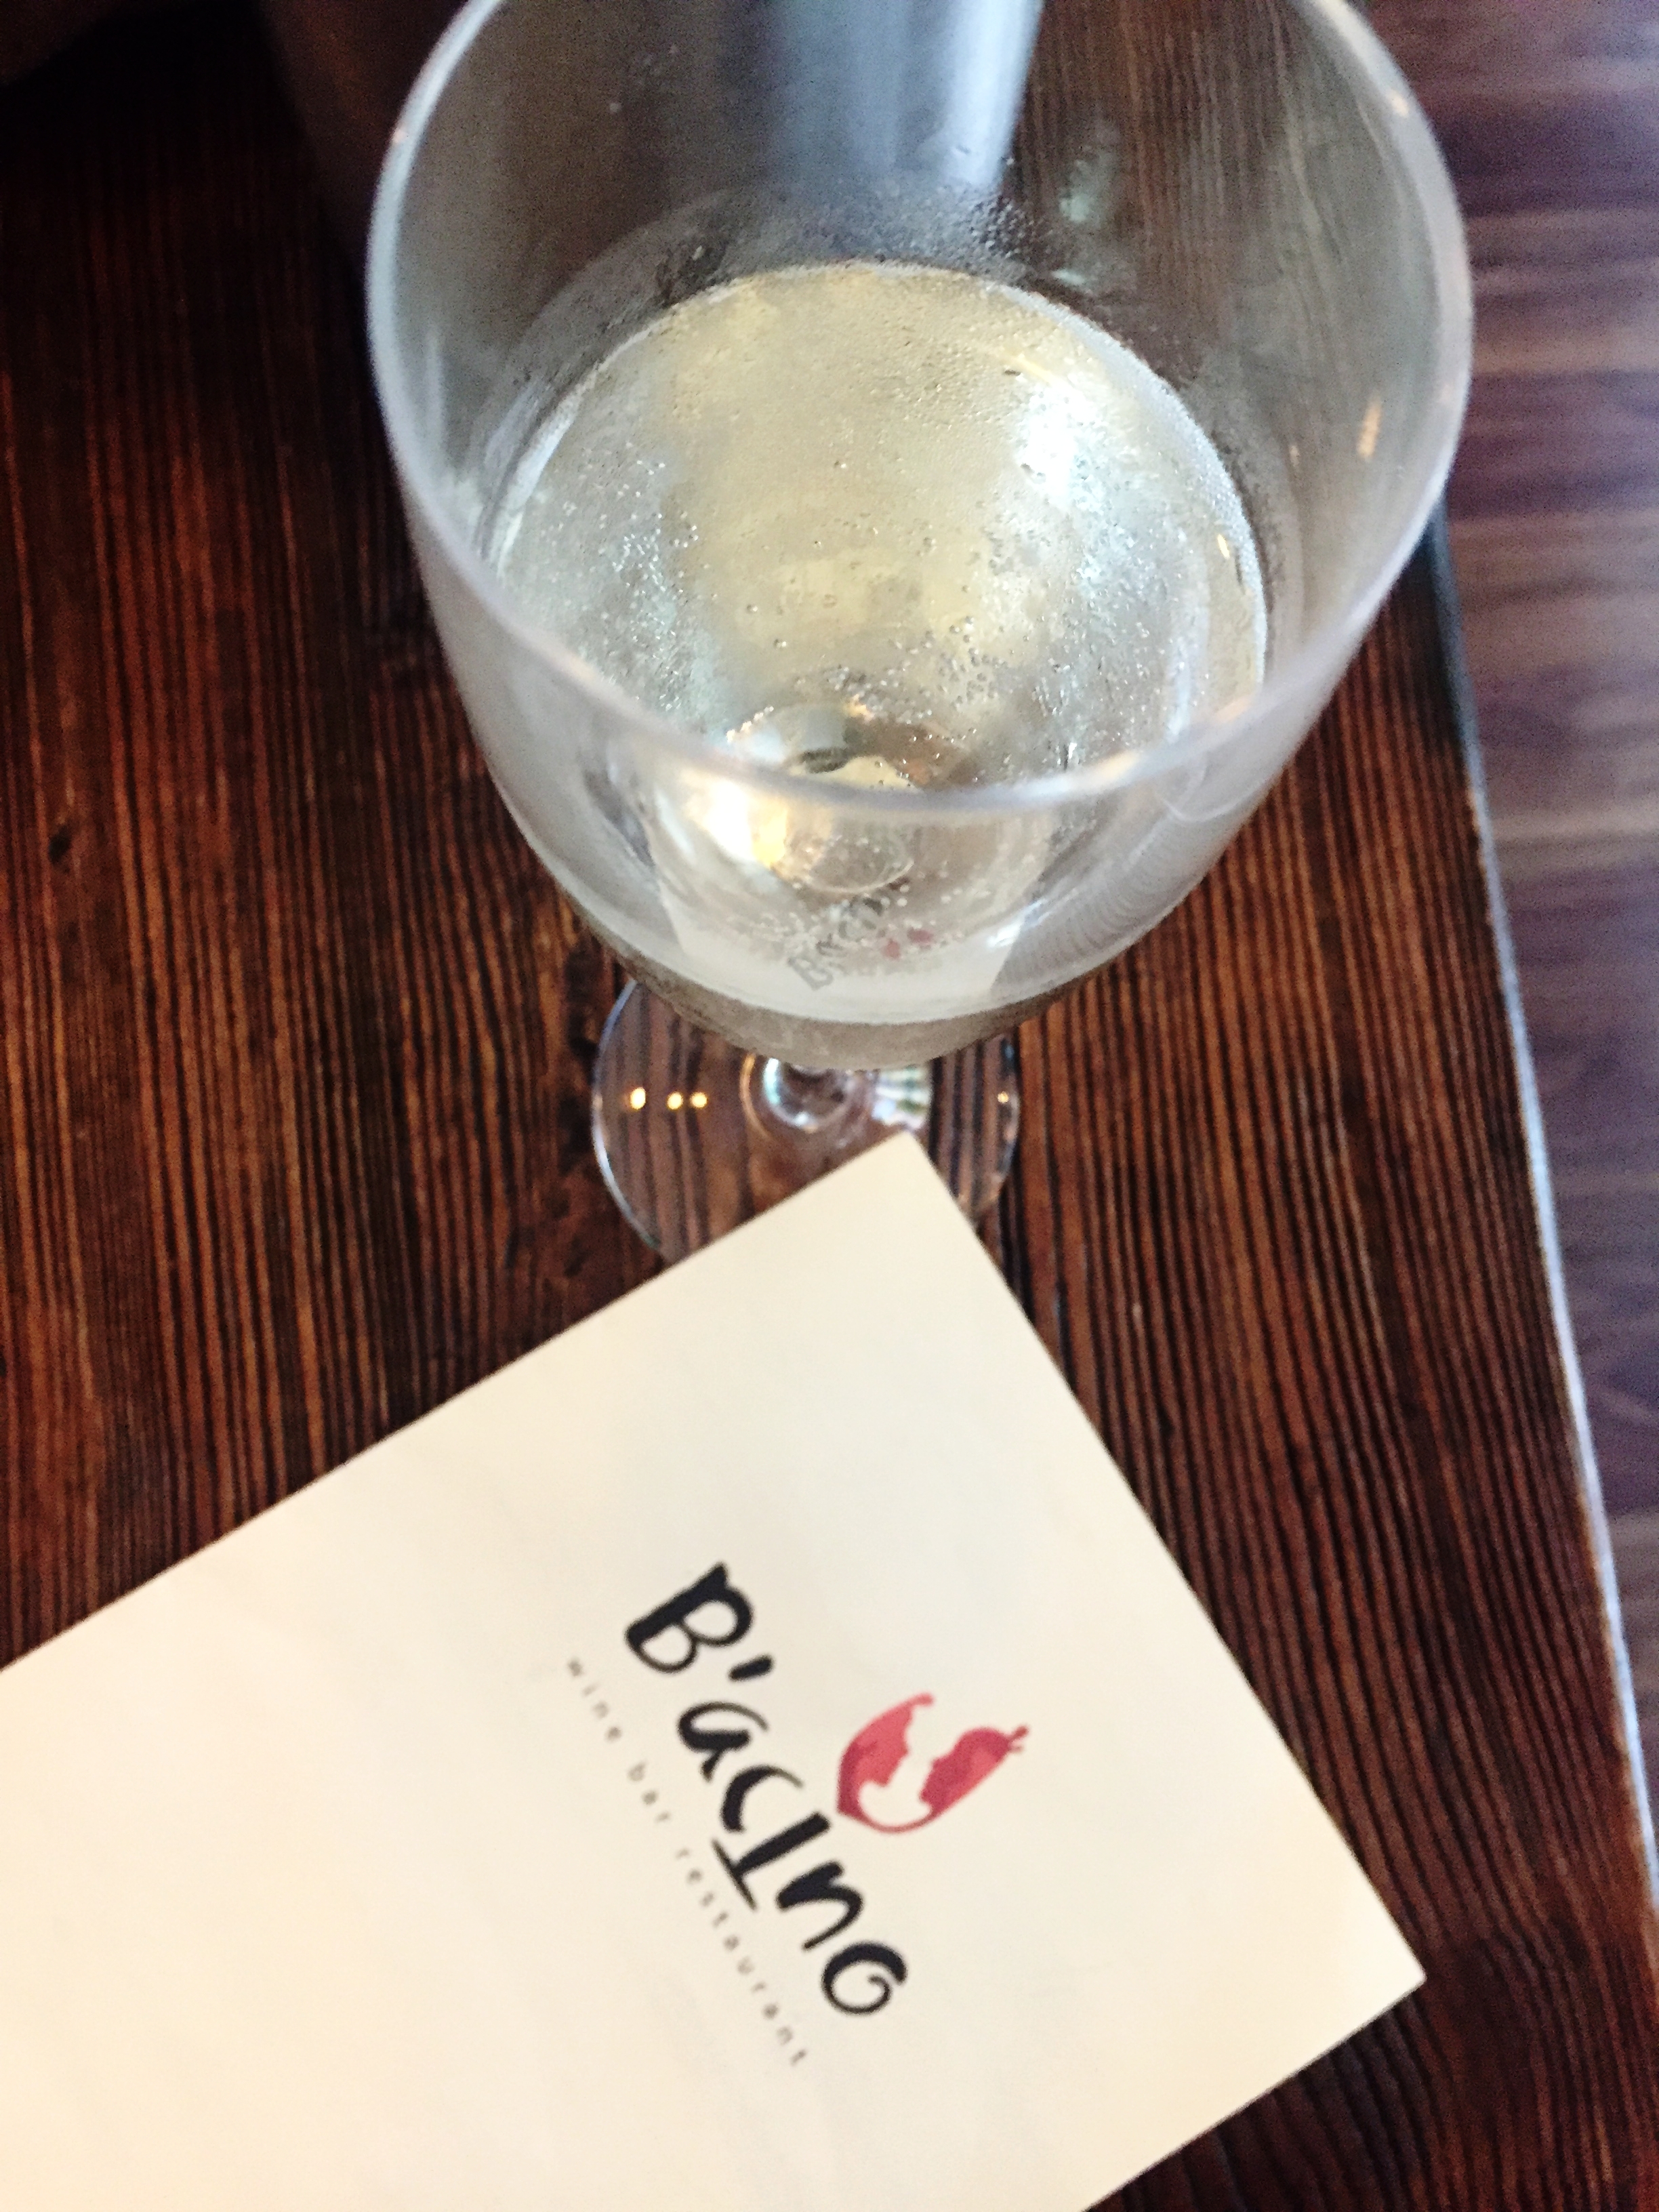 B'acino wine bar restaurant review